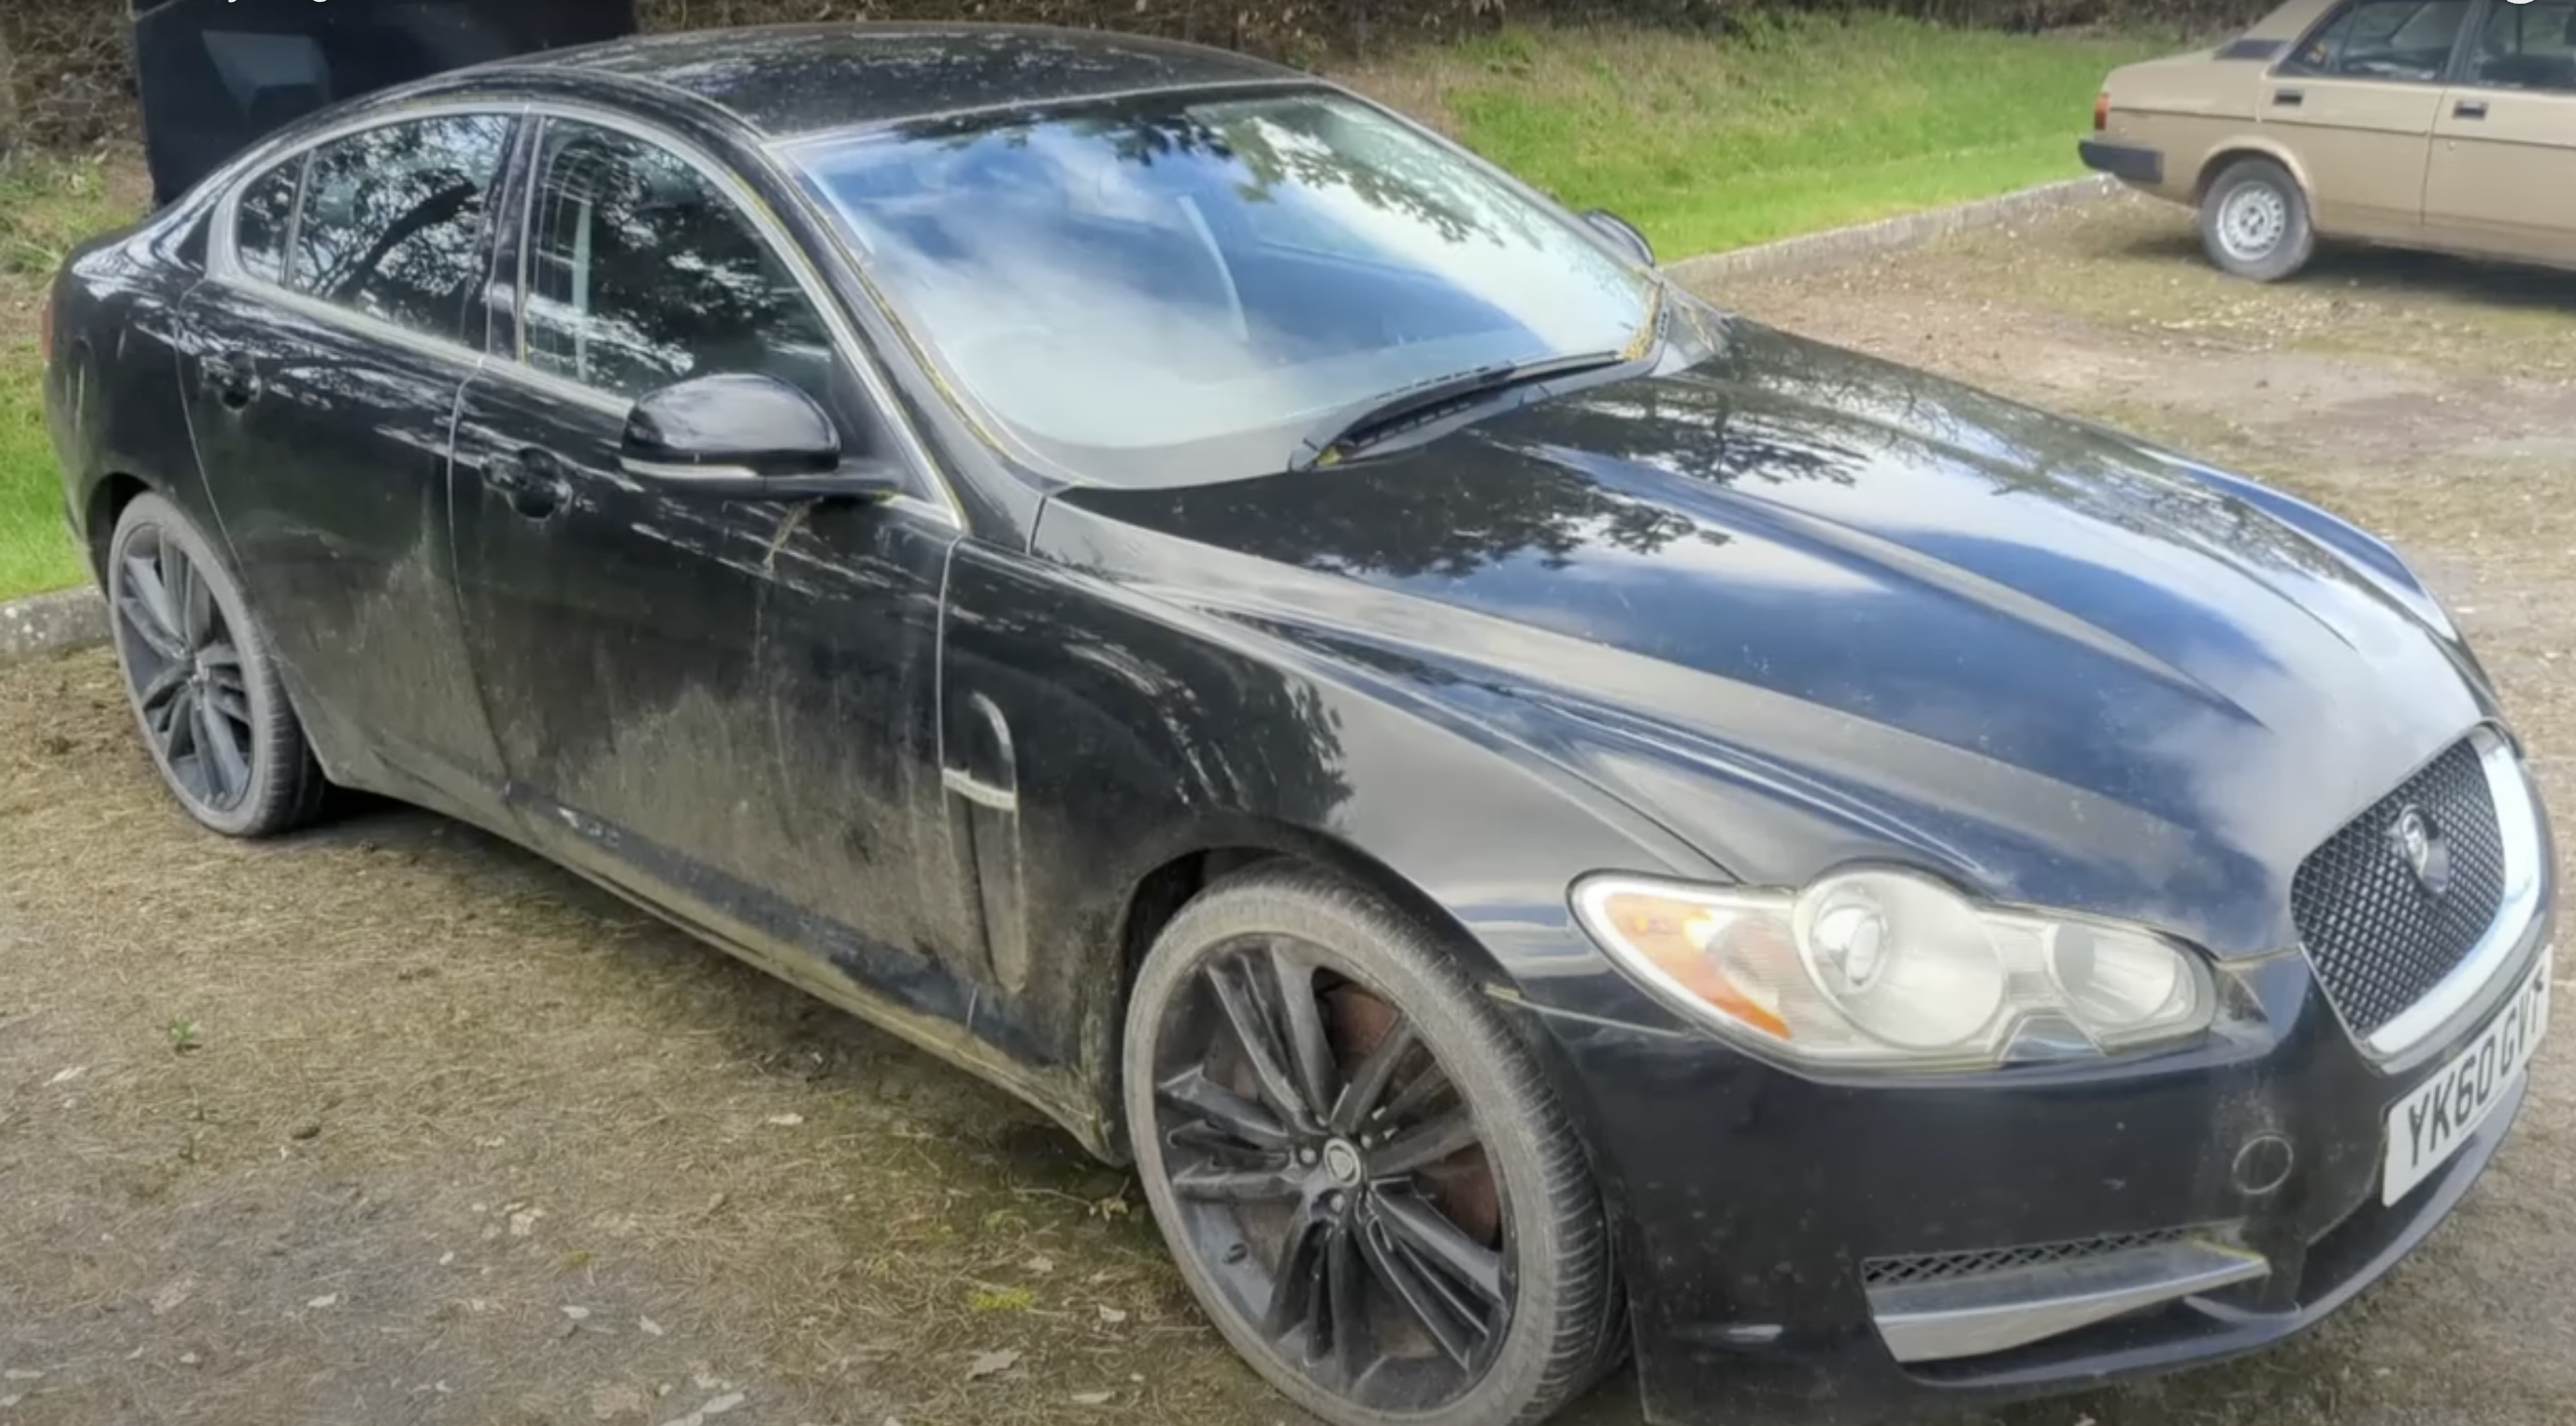 A used car dealer lost £2,300 when selling this broken Jaguar